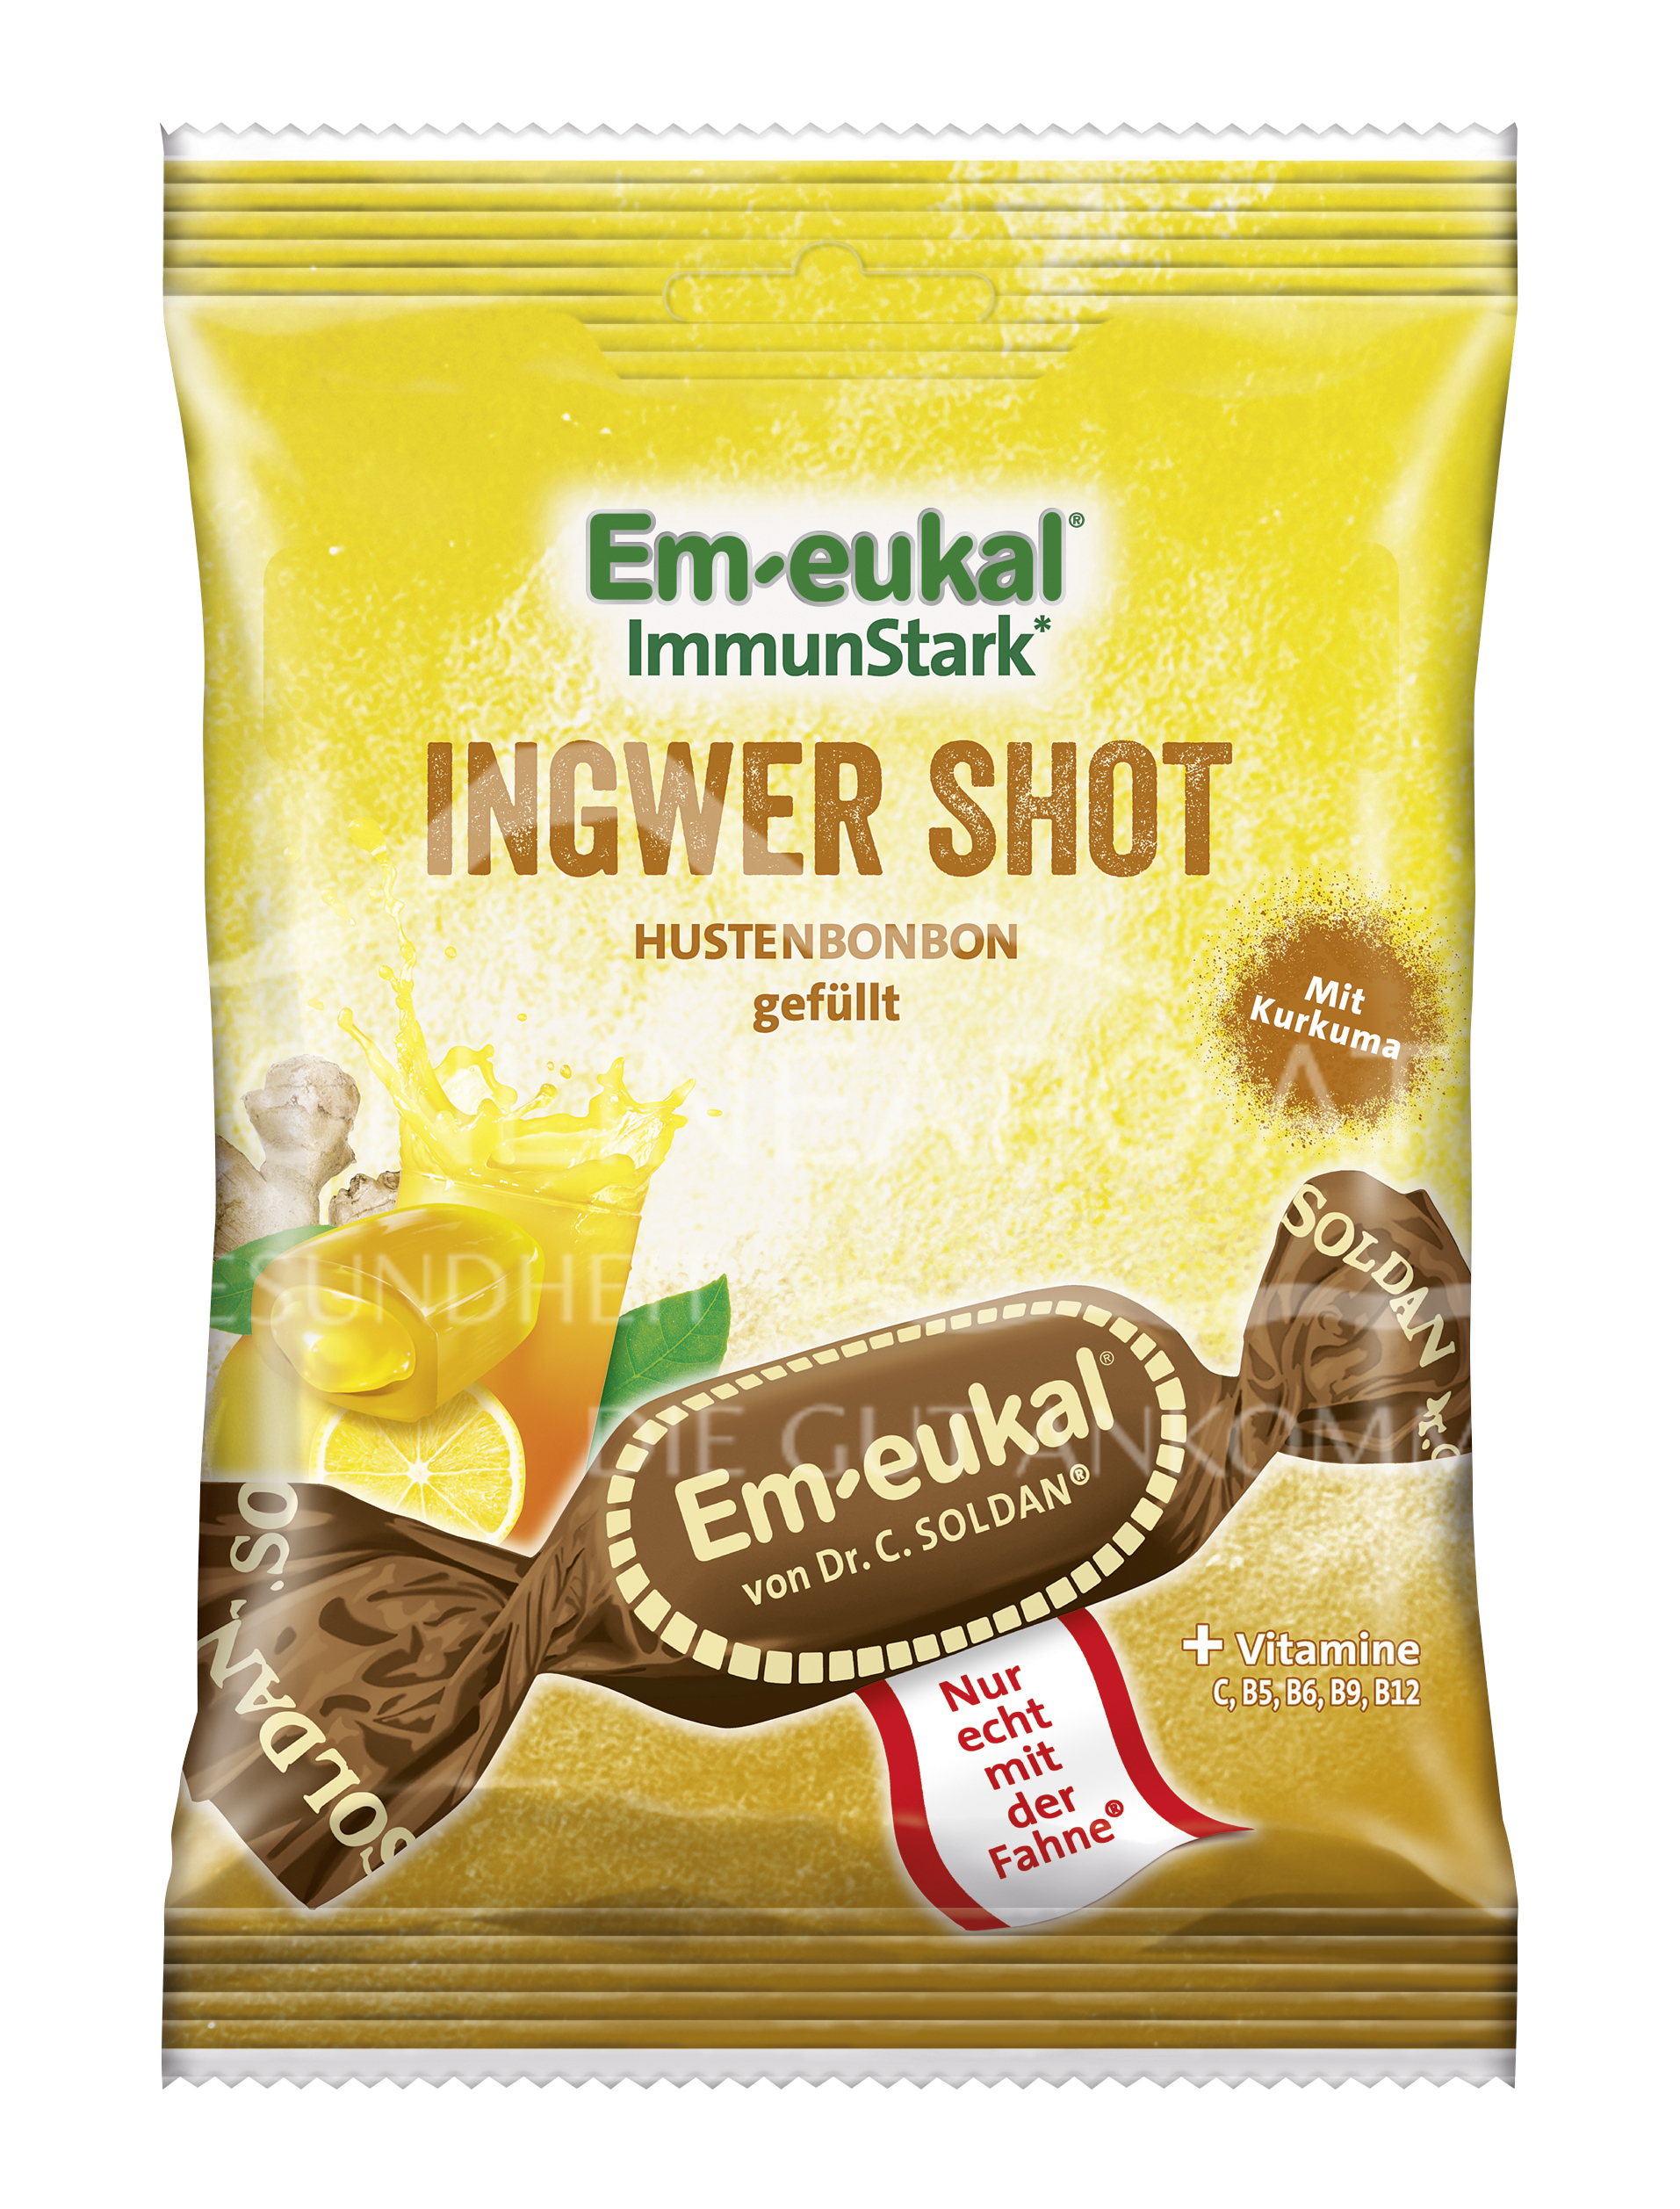 Em-eukal ImmunStark* Ingwer Shot Hustenbonbons